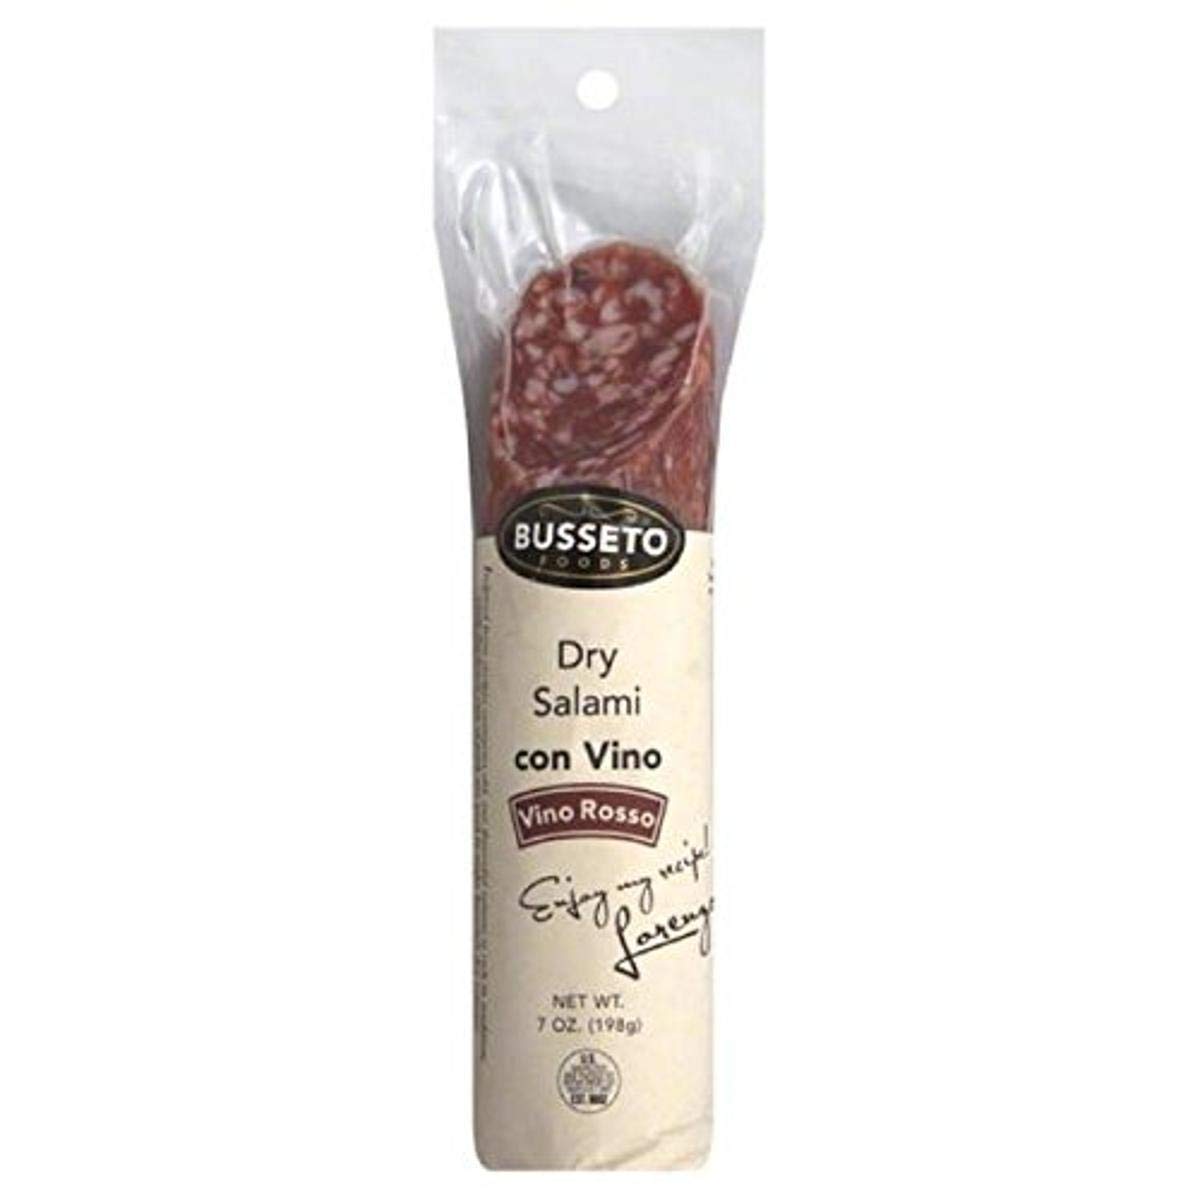 Busseto Con Vino Dry Salami 7oz 15ct